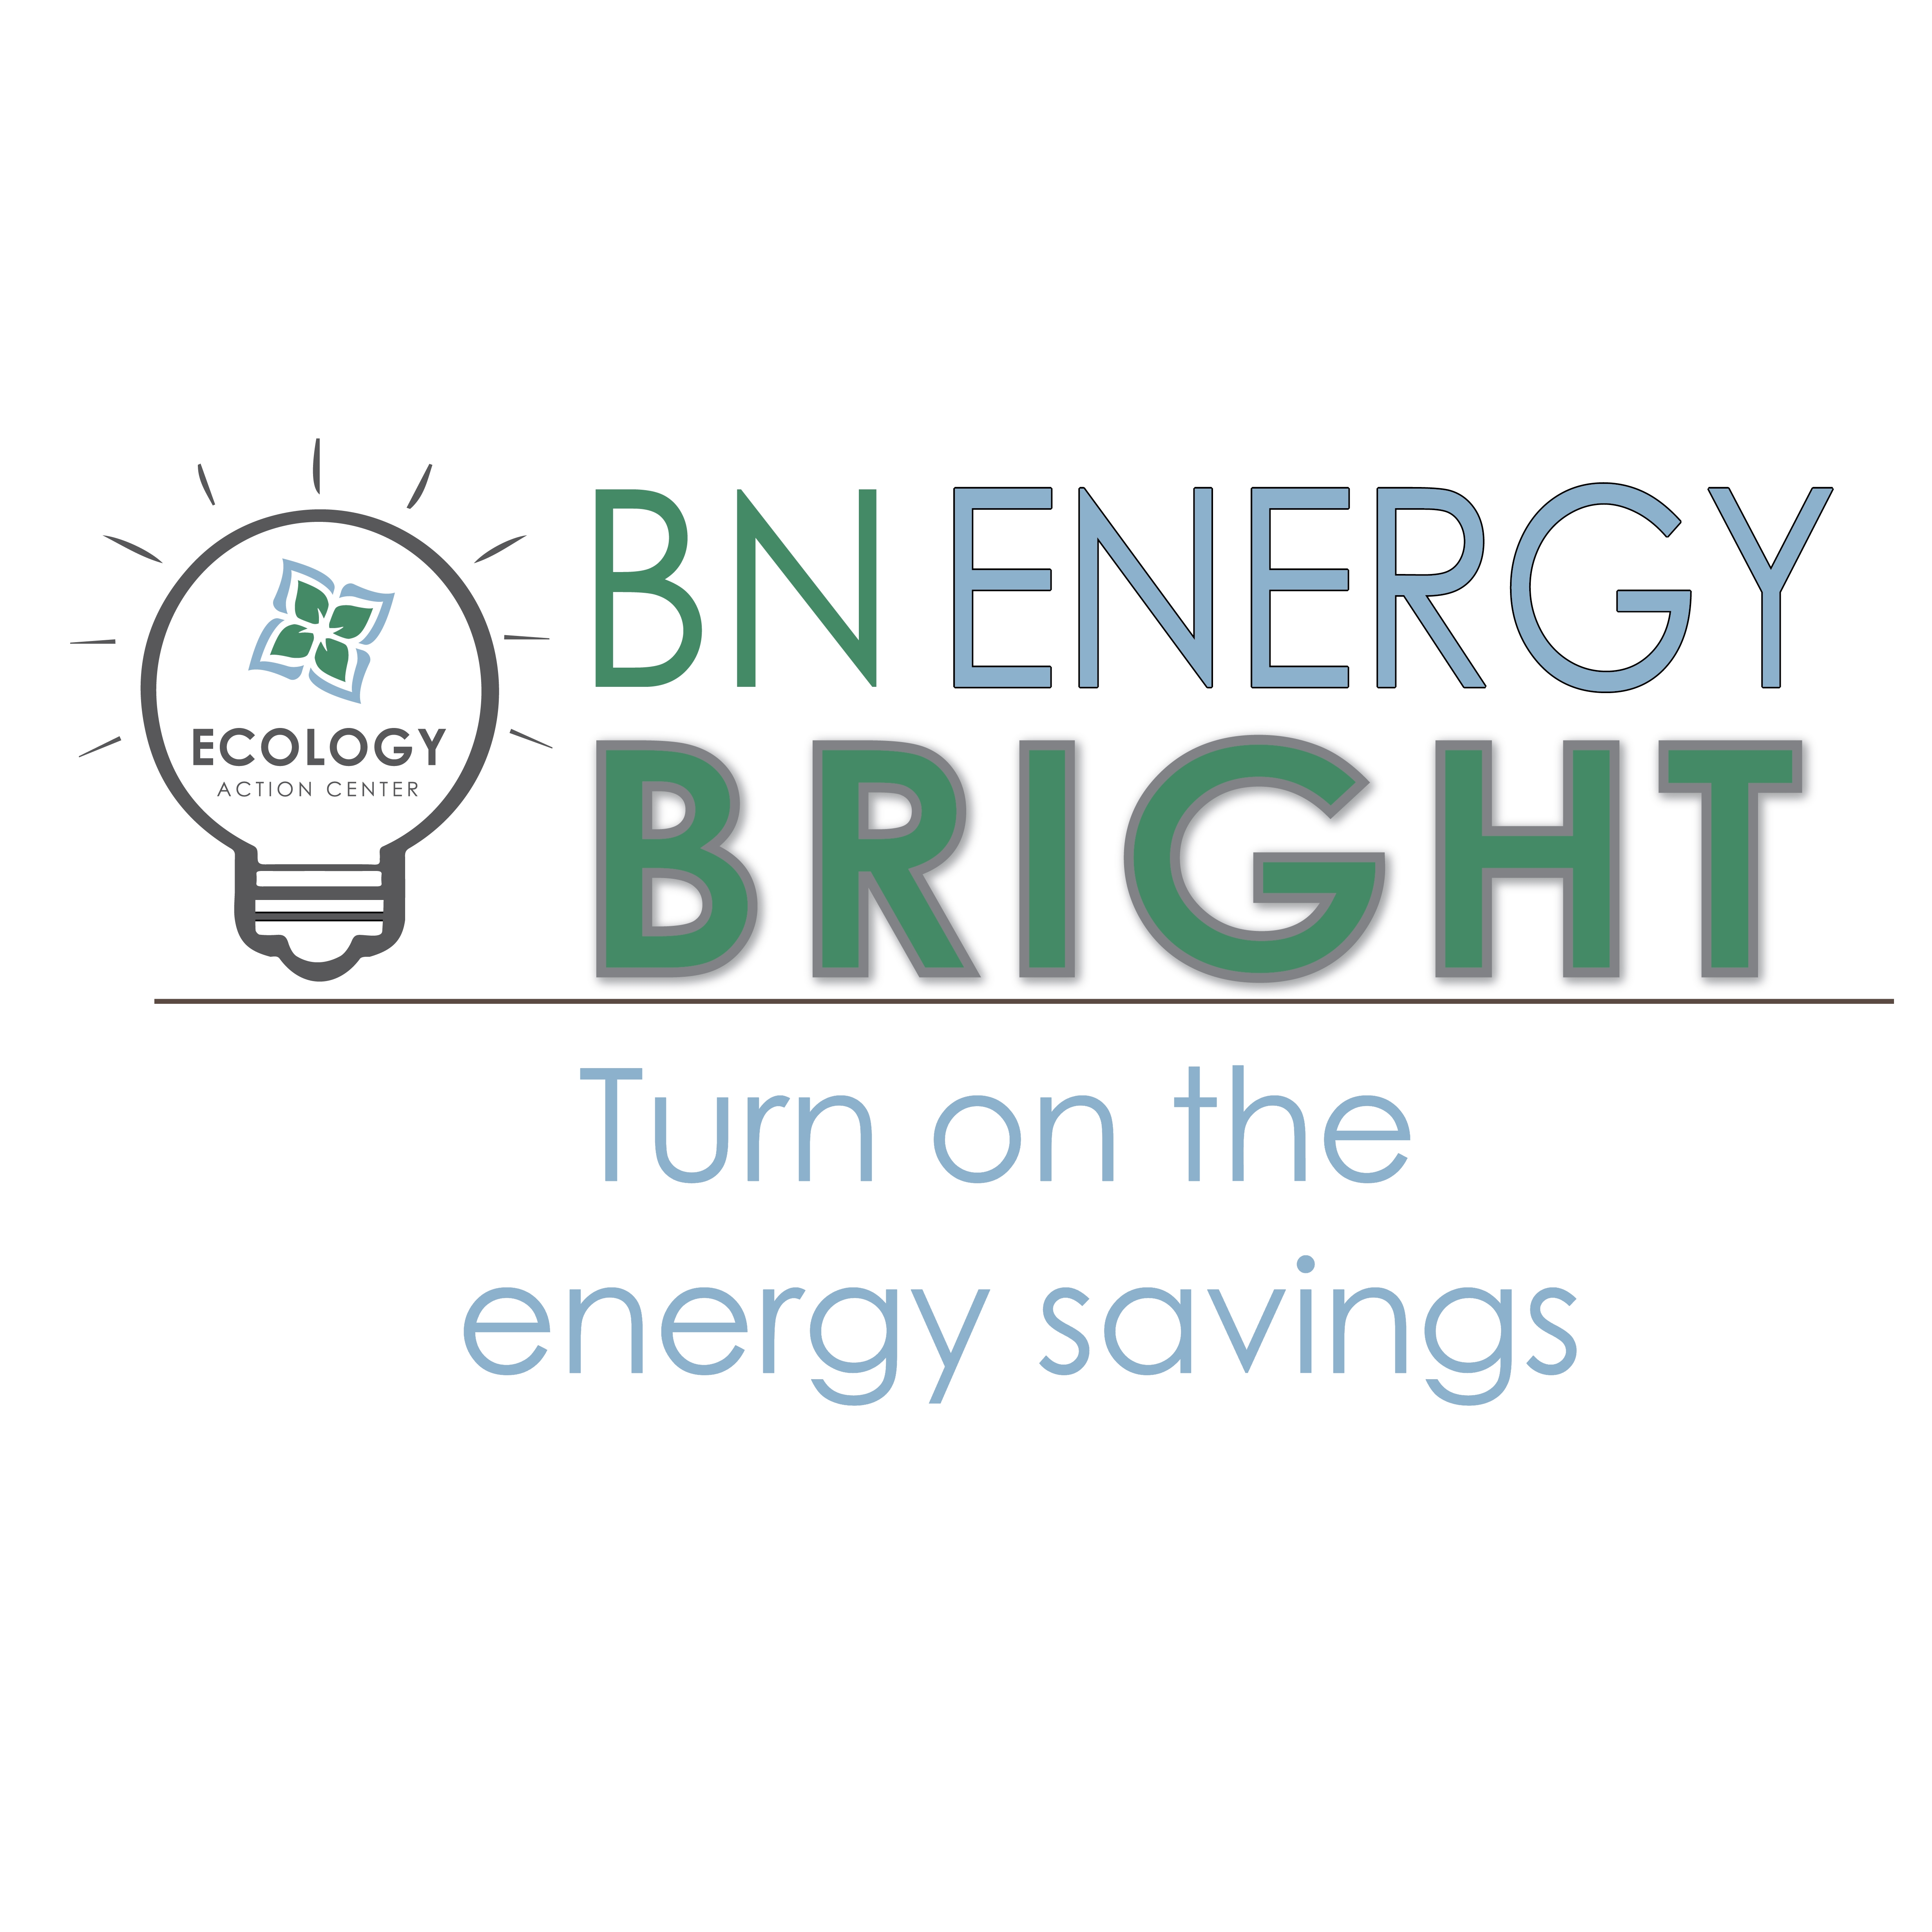 BN Energy Bright